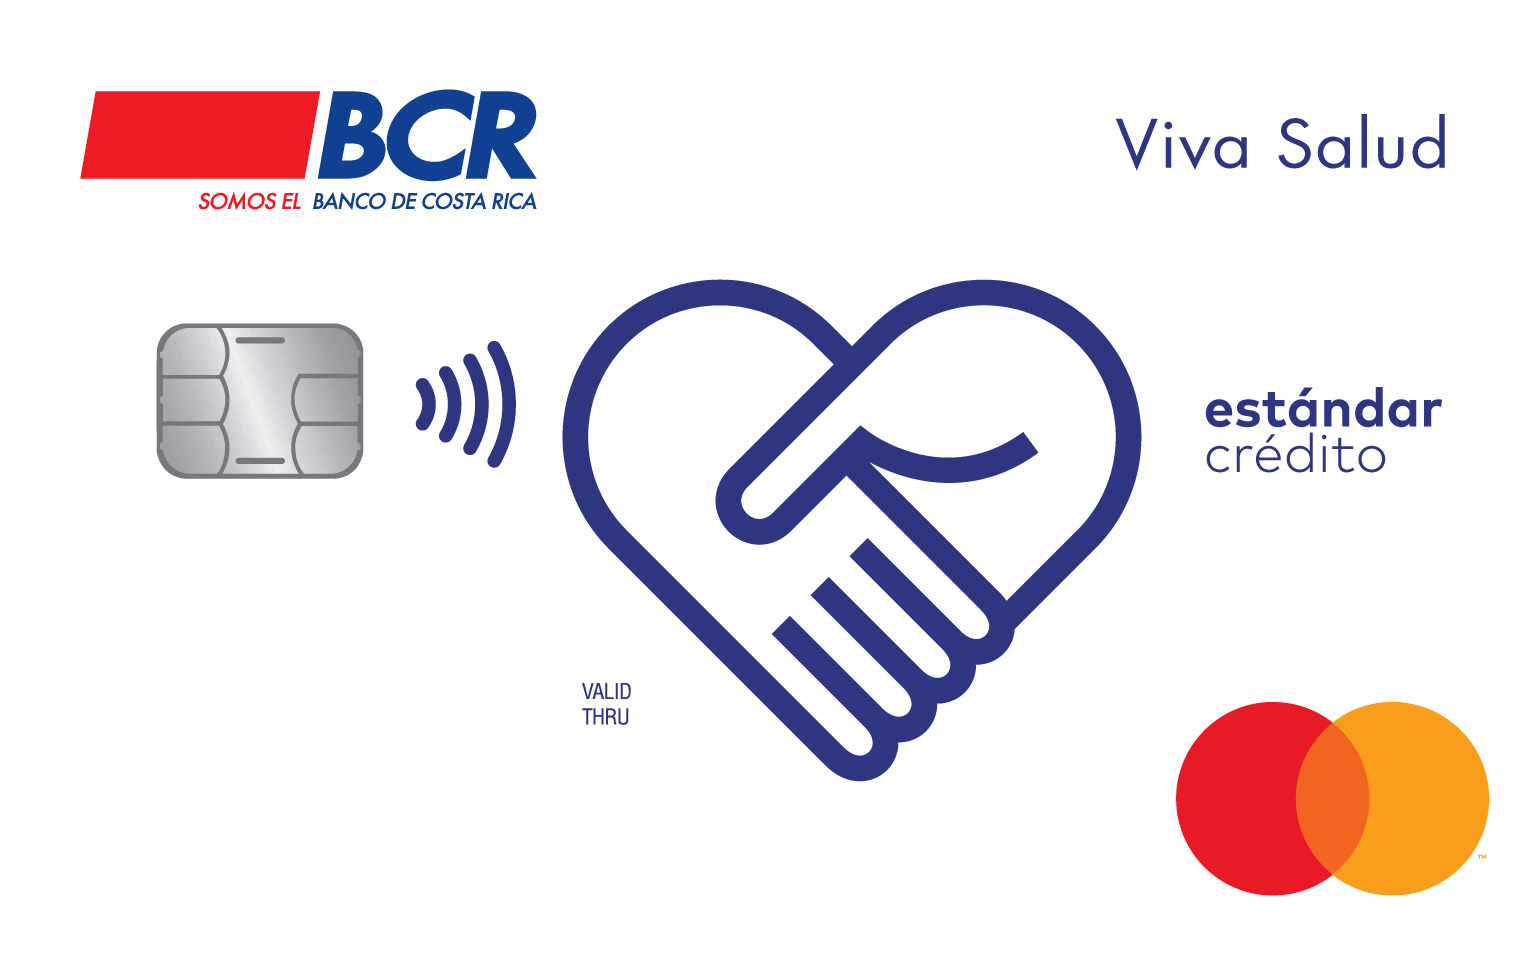 Tarjeta de Crédito BCR MasterCard Viva Salud EstandarTarjeta de Crédito BCR MasterCard Viva Salud Estandar